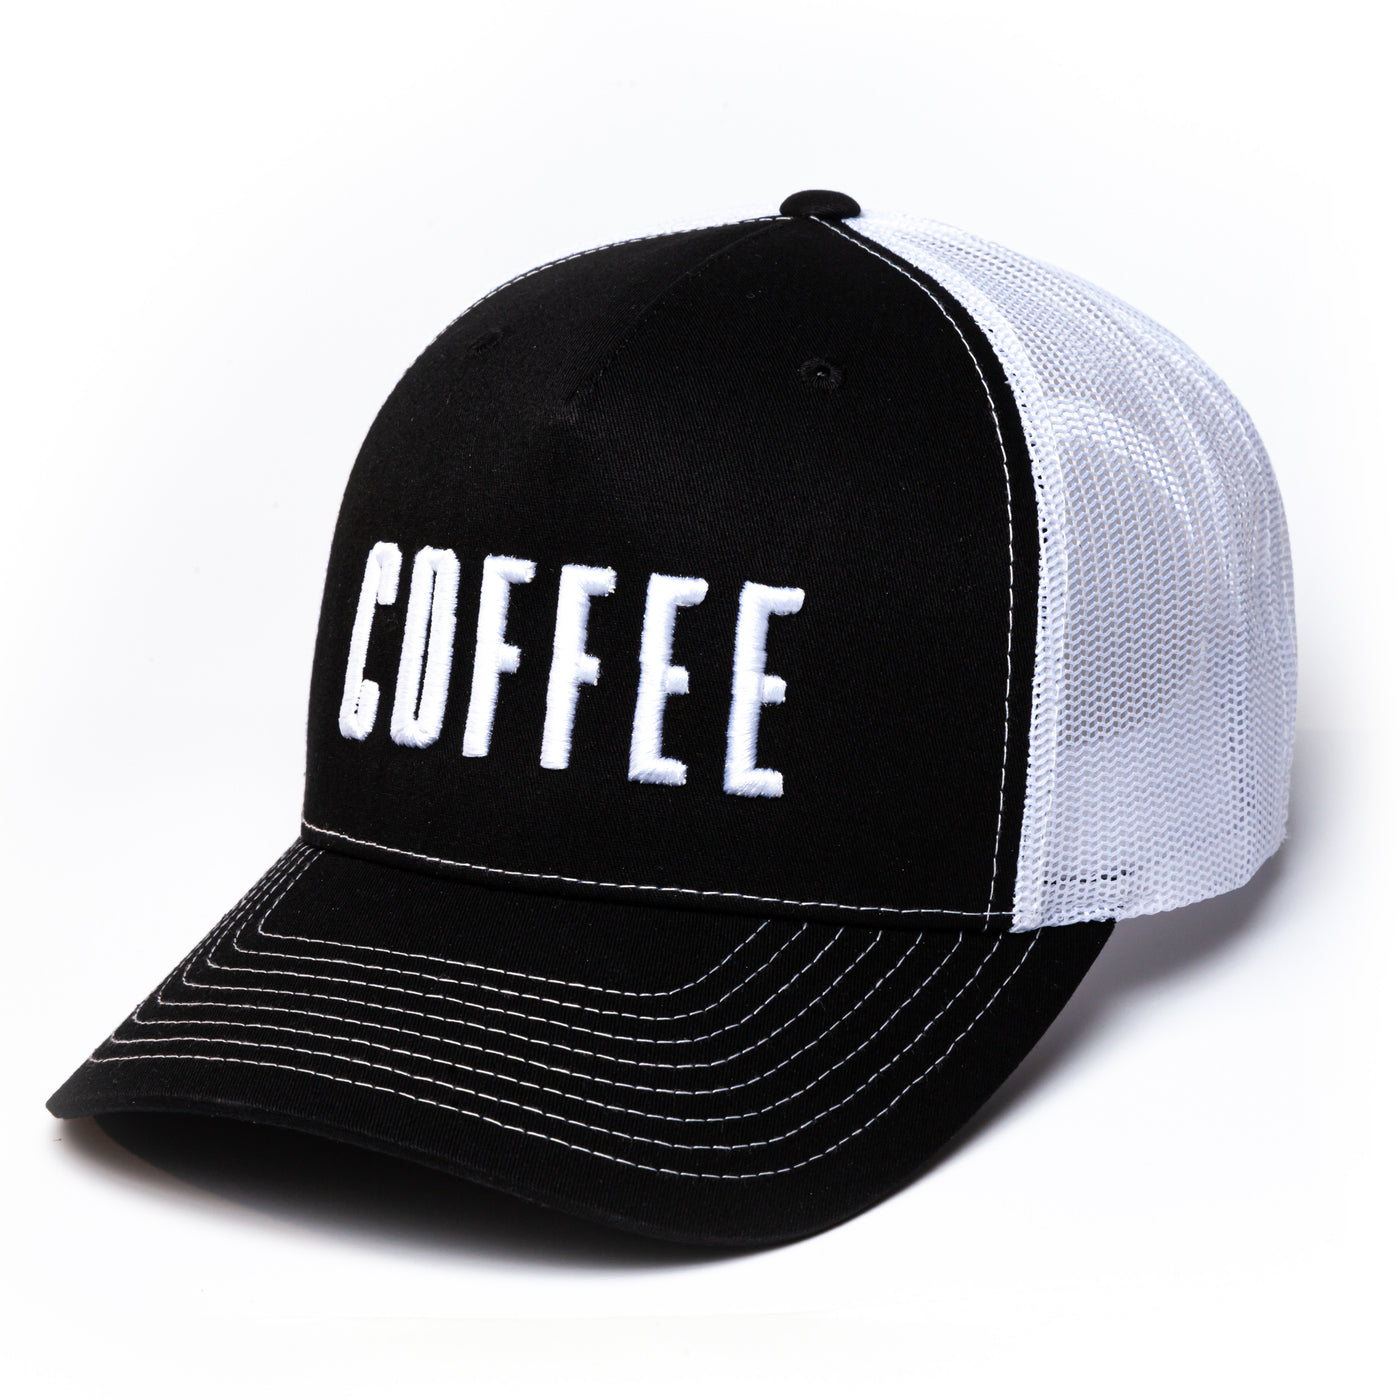 COFFEE Hat